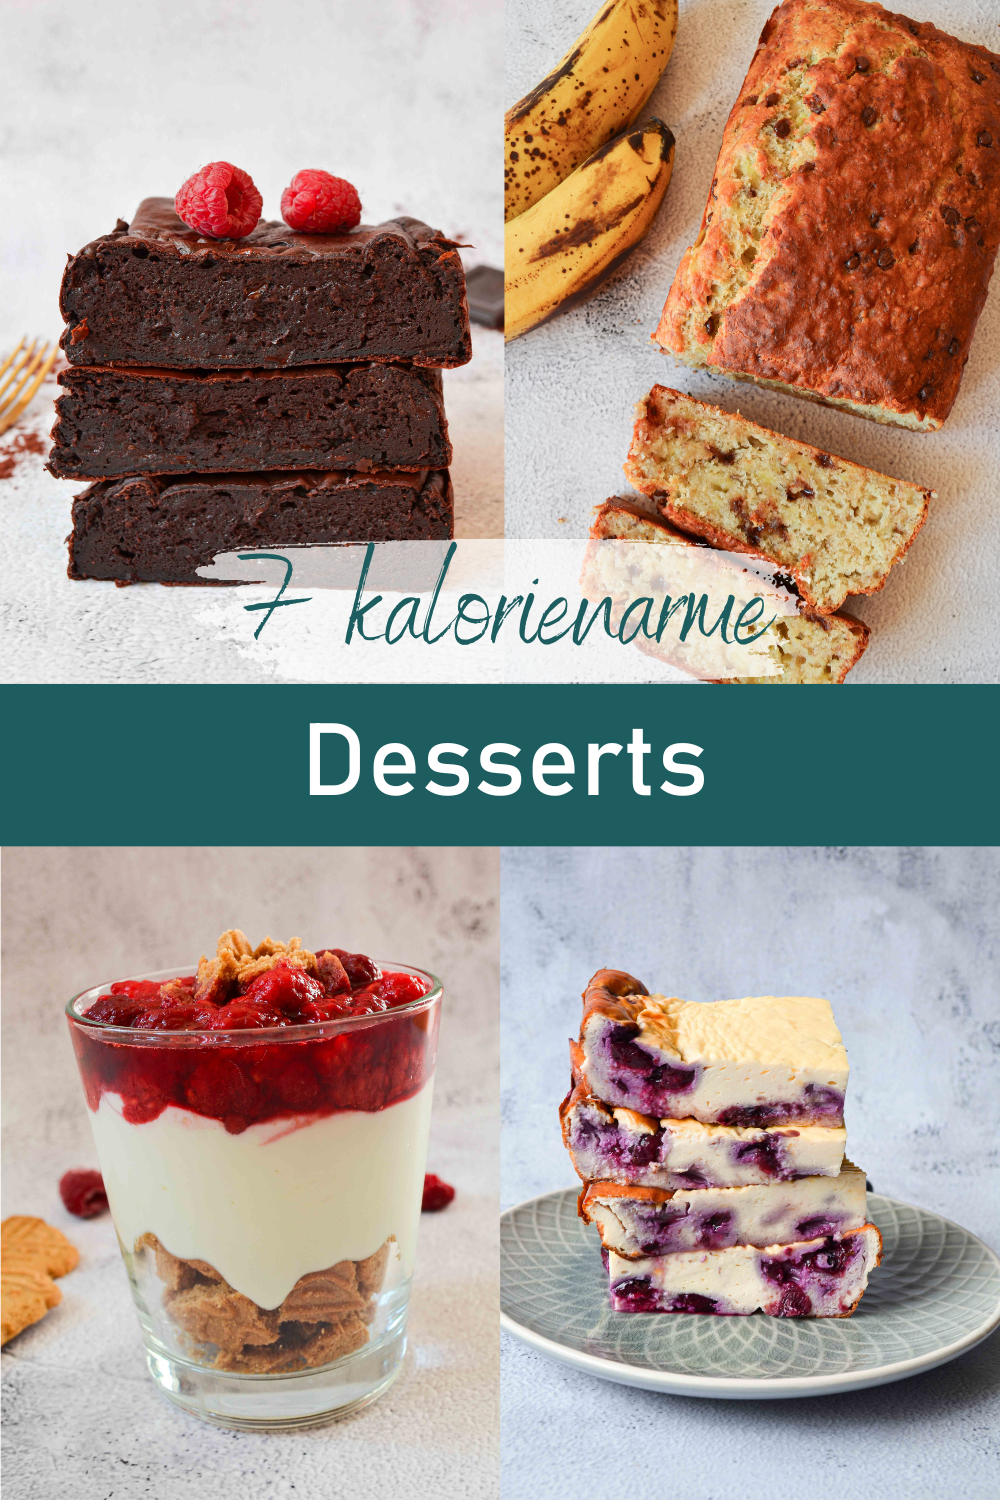 7 kalorienarme Desserts